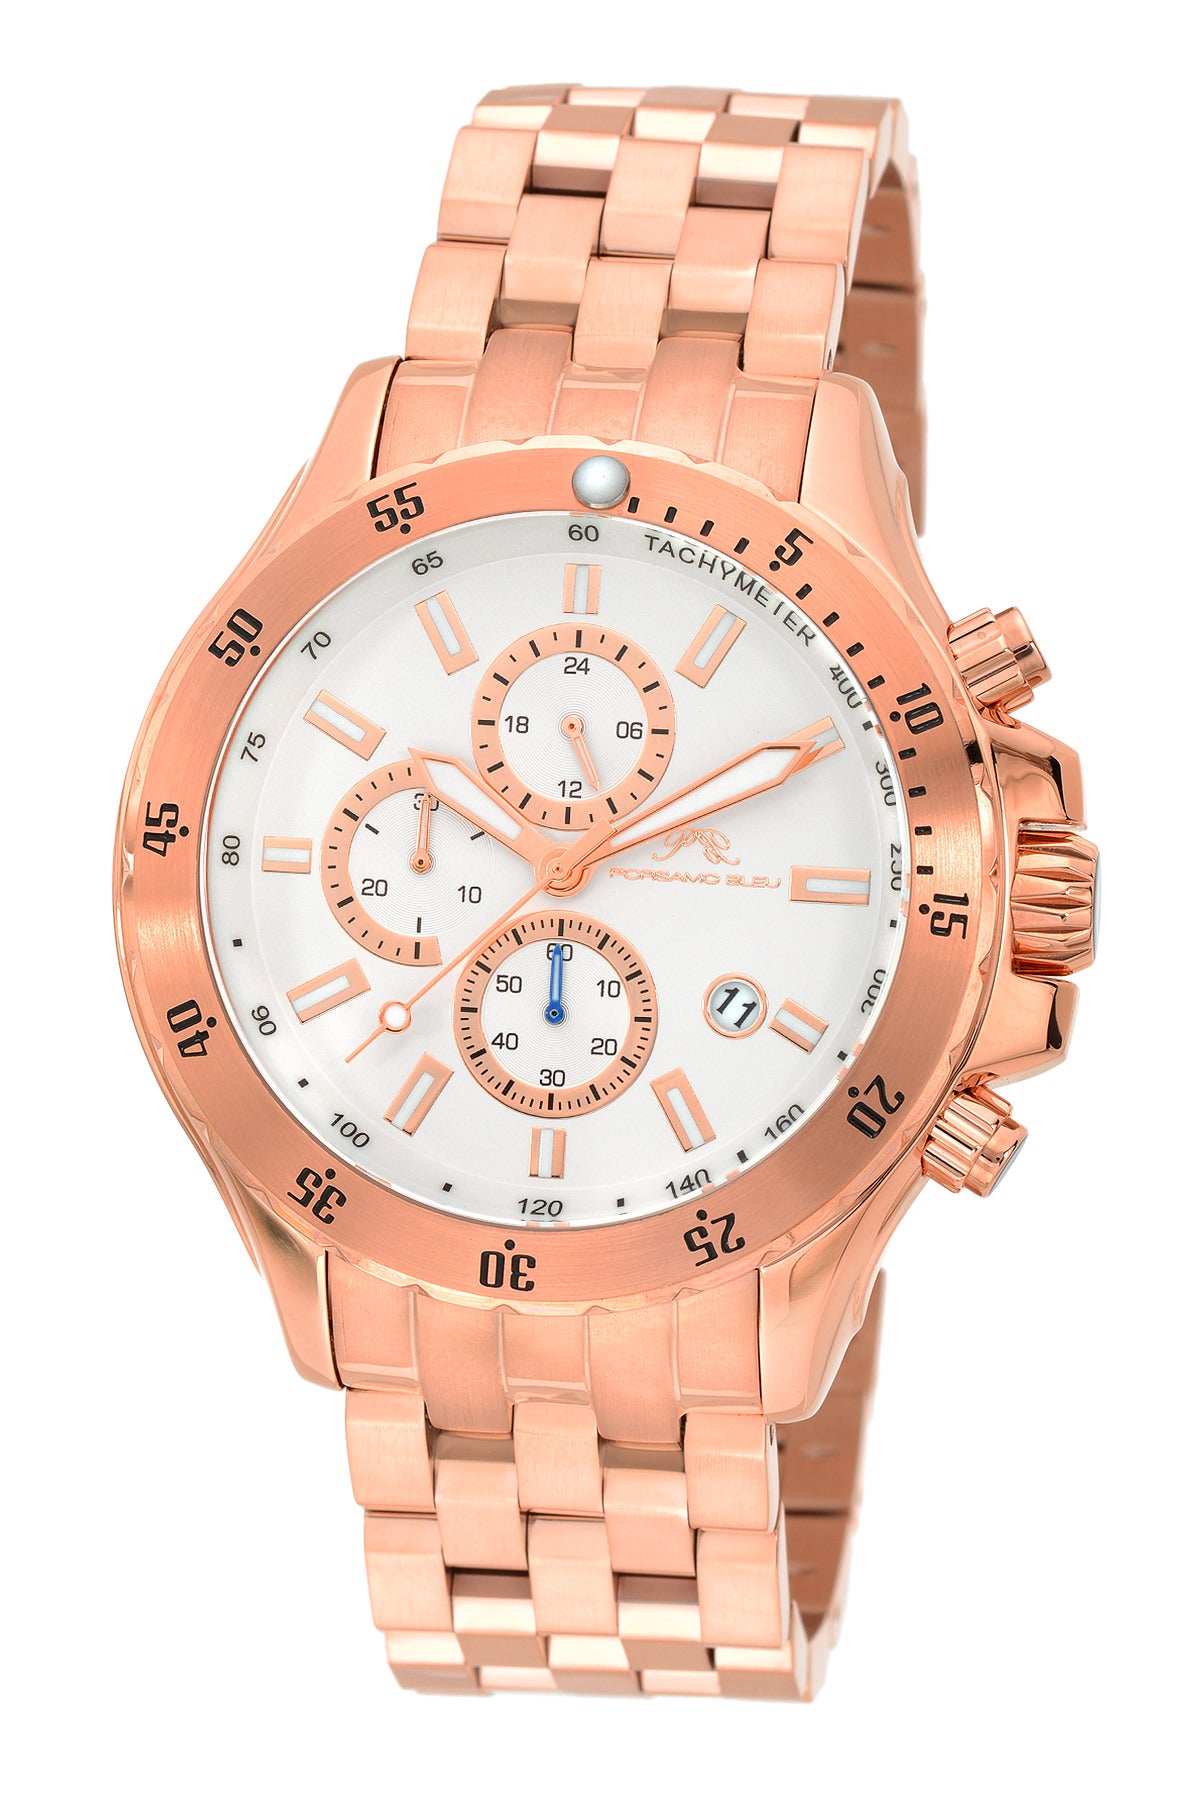 Porsamo Bleu Lorenzo luxury chronograph men's stainless steel watch, rose 561CLOS